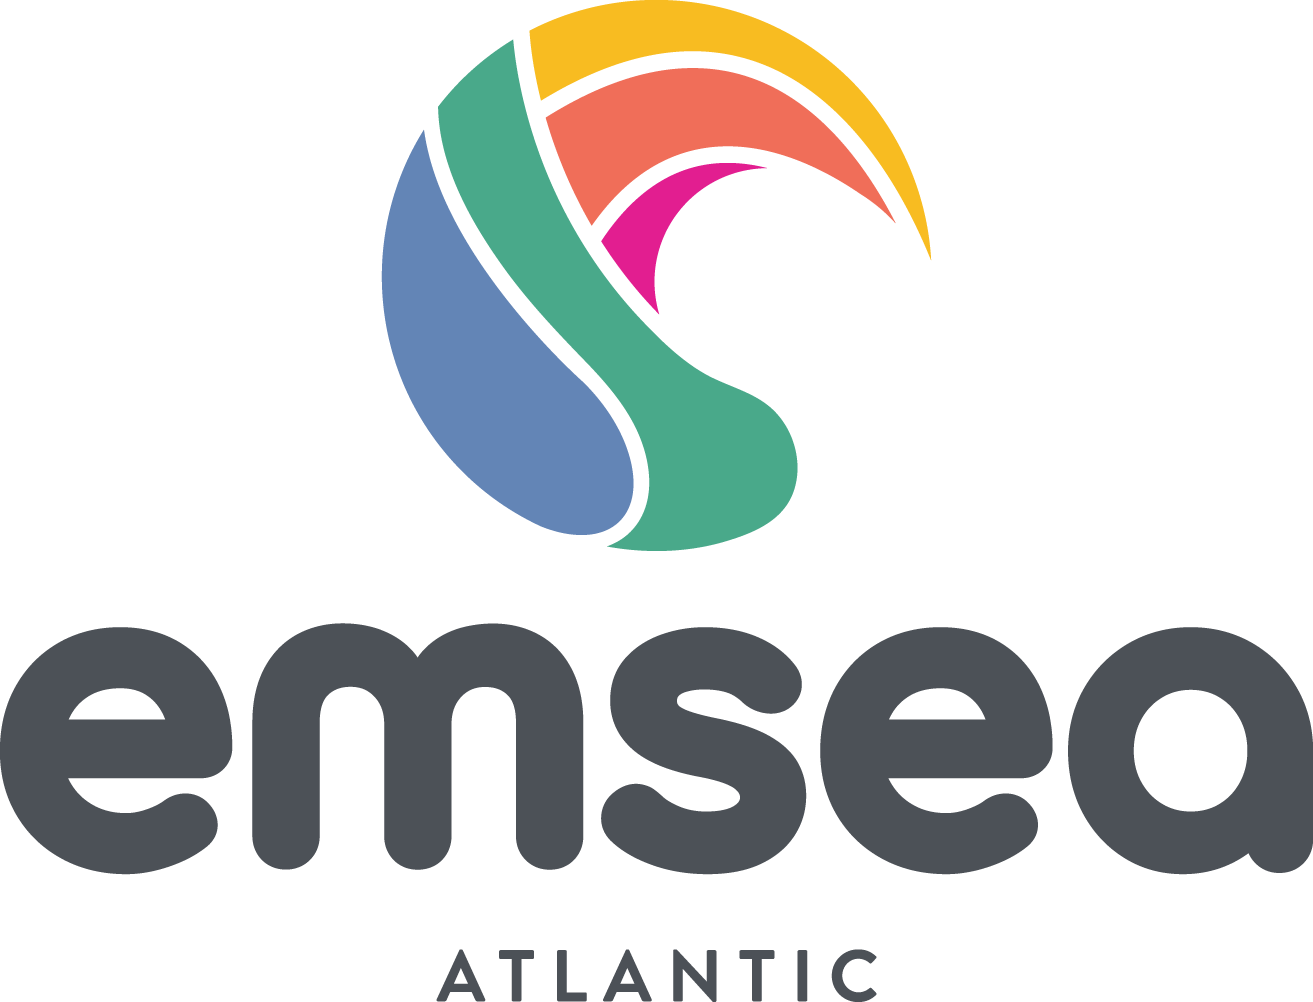 EMSEA-Atlantic